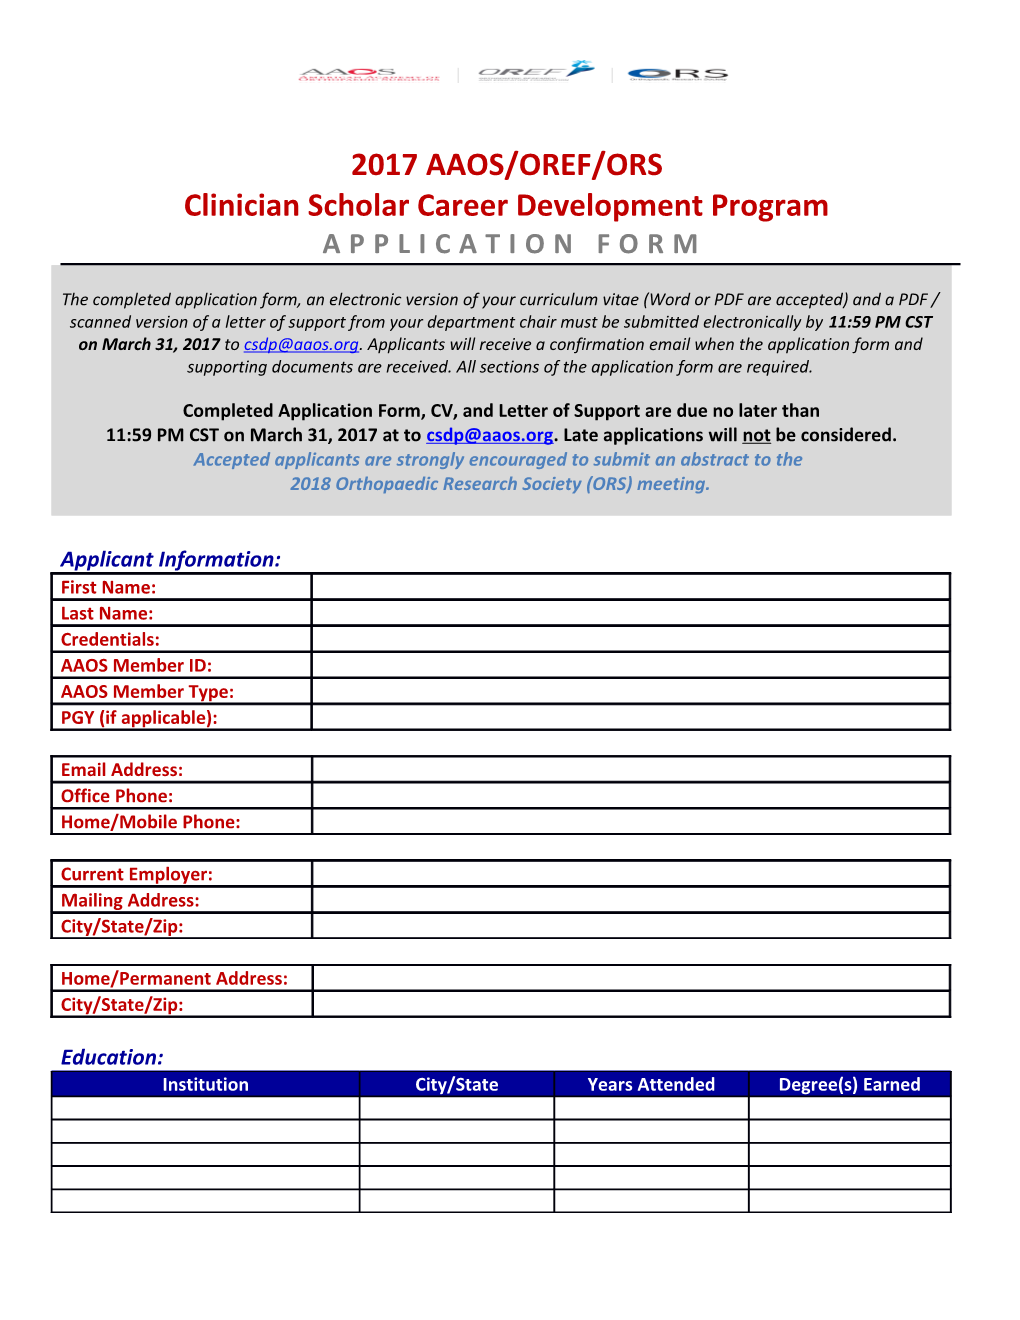 Clinician Scholar Career Development Program